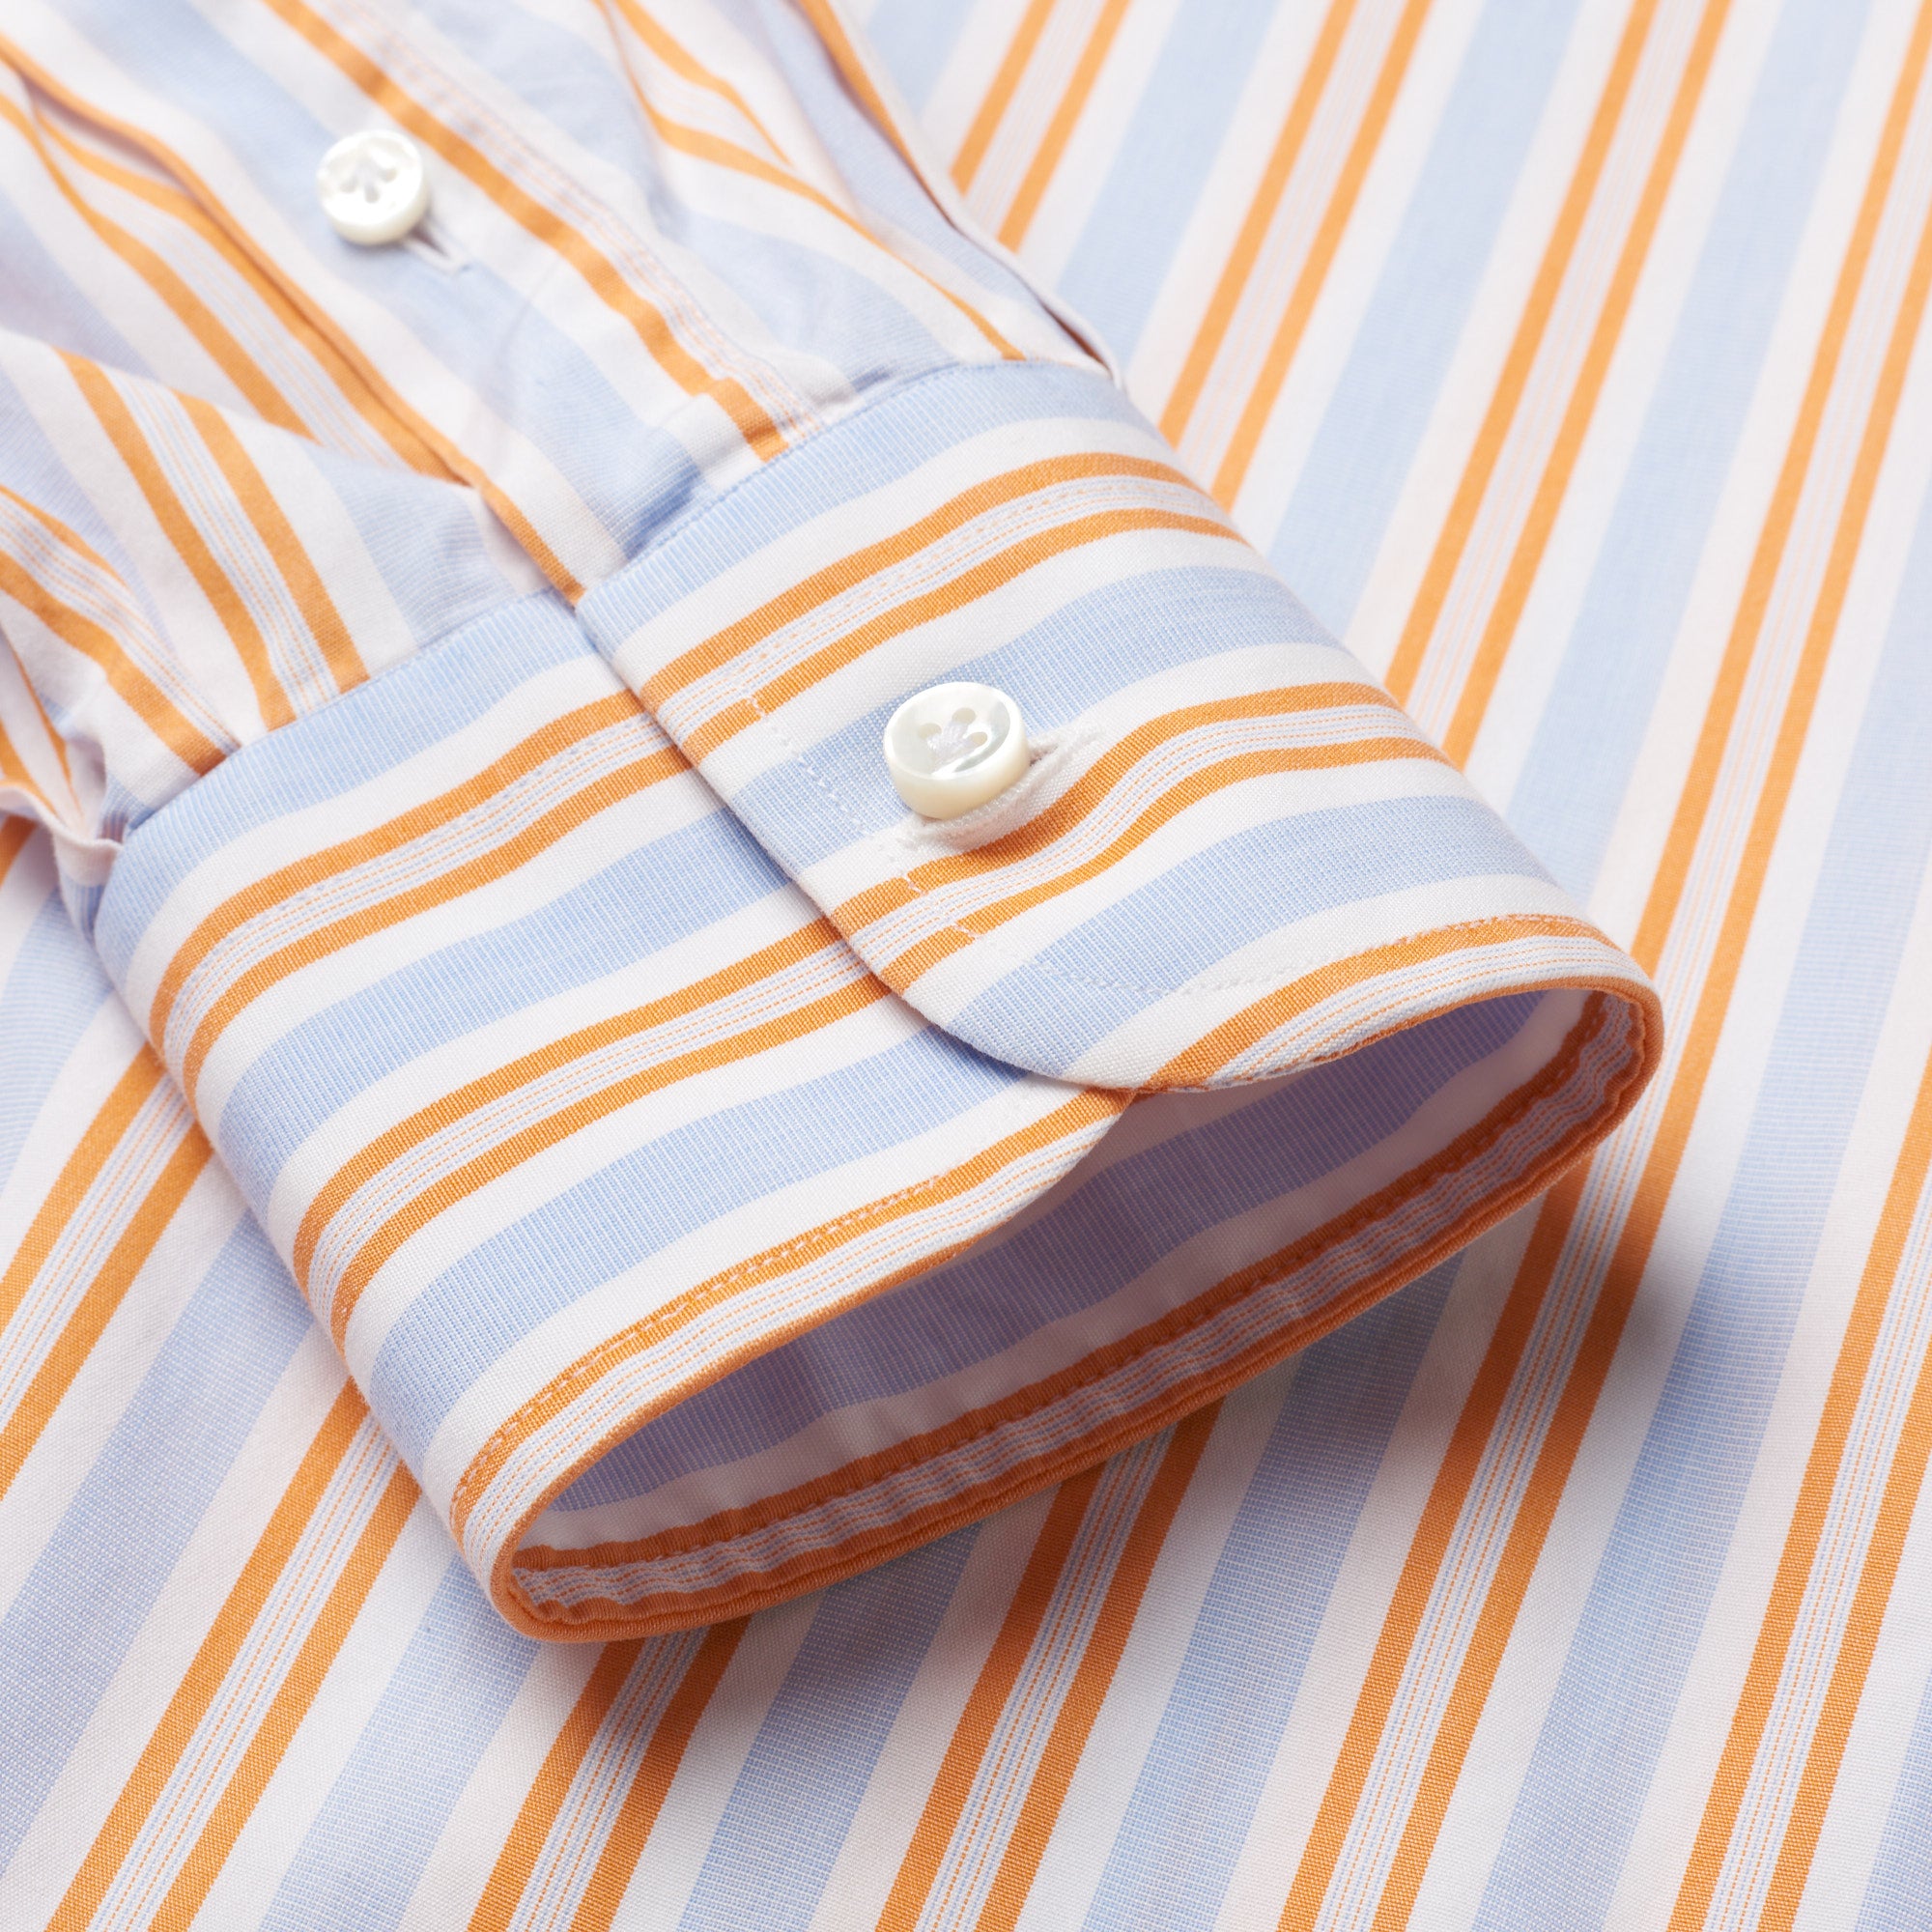 BARBA Handmade Multi-Color Striped Cotton Button-Down Shirt EU 40 US 15.75 BARBA